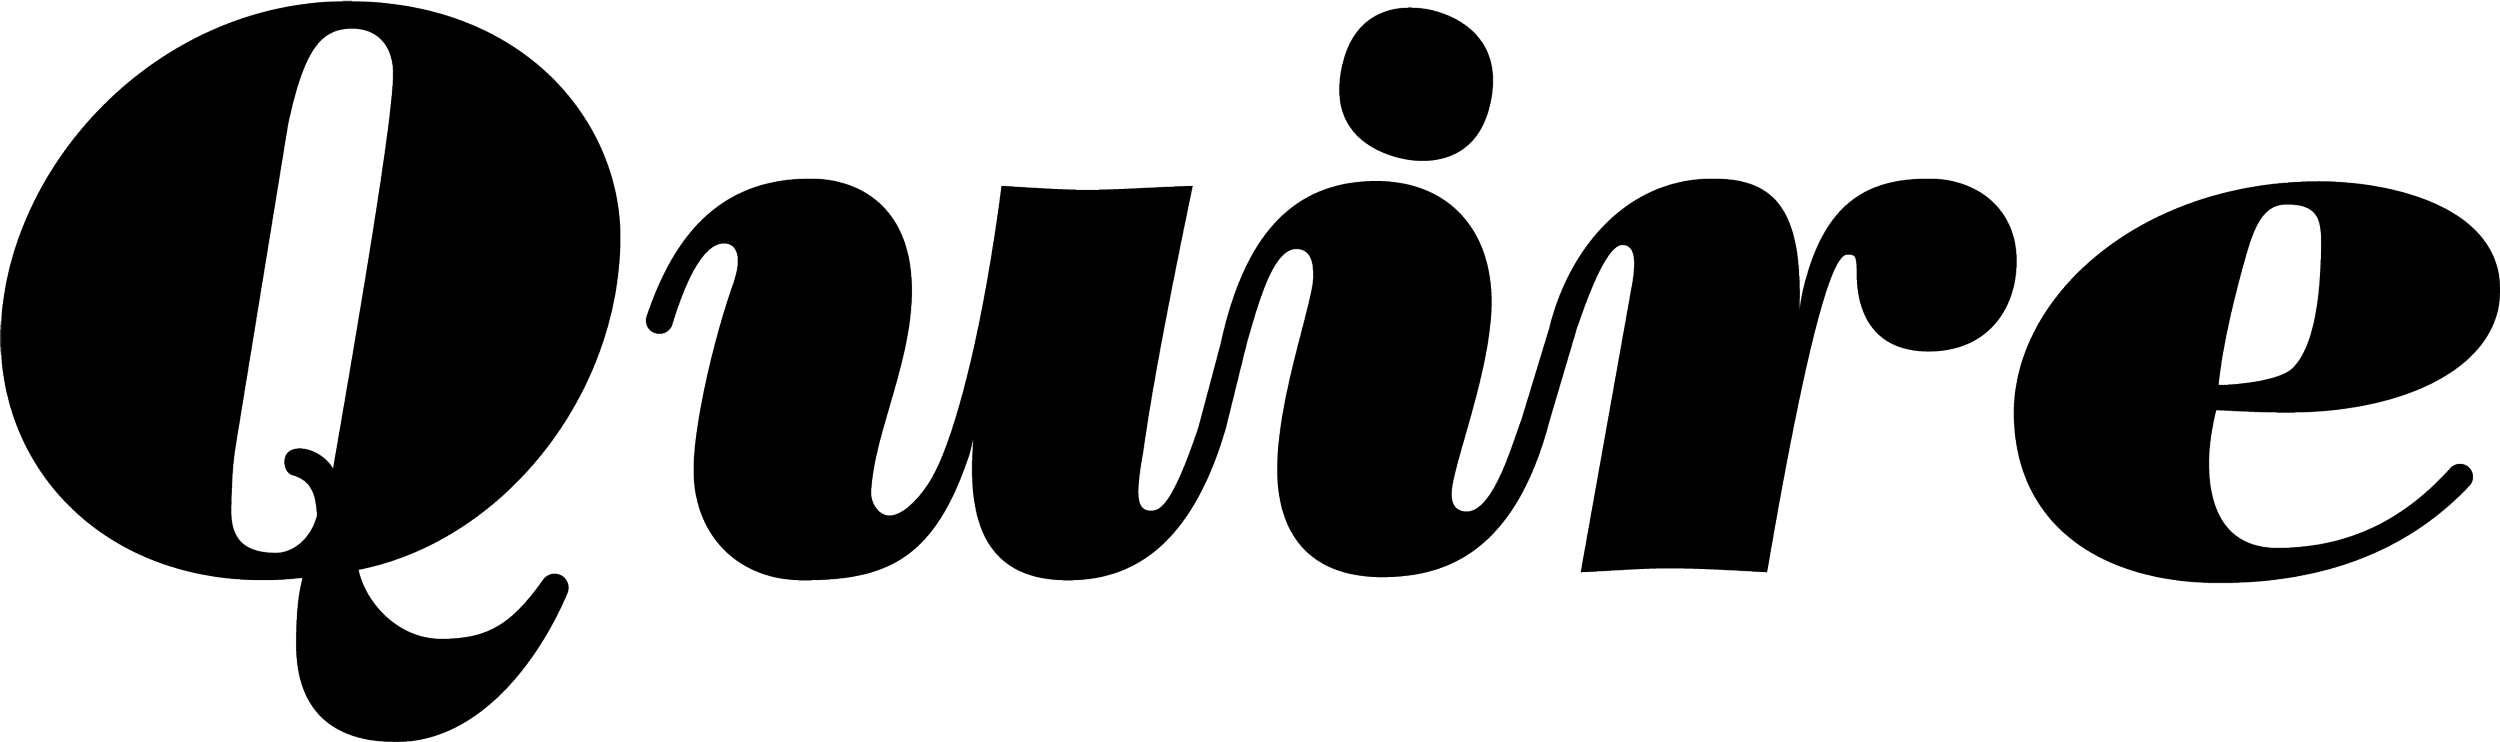 Quire_Logo_FINAL_black.png